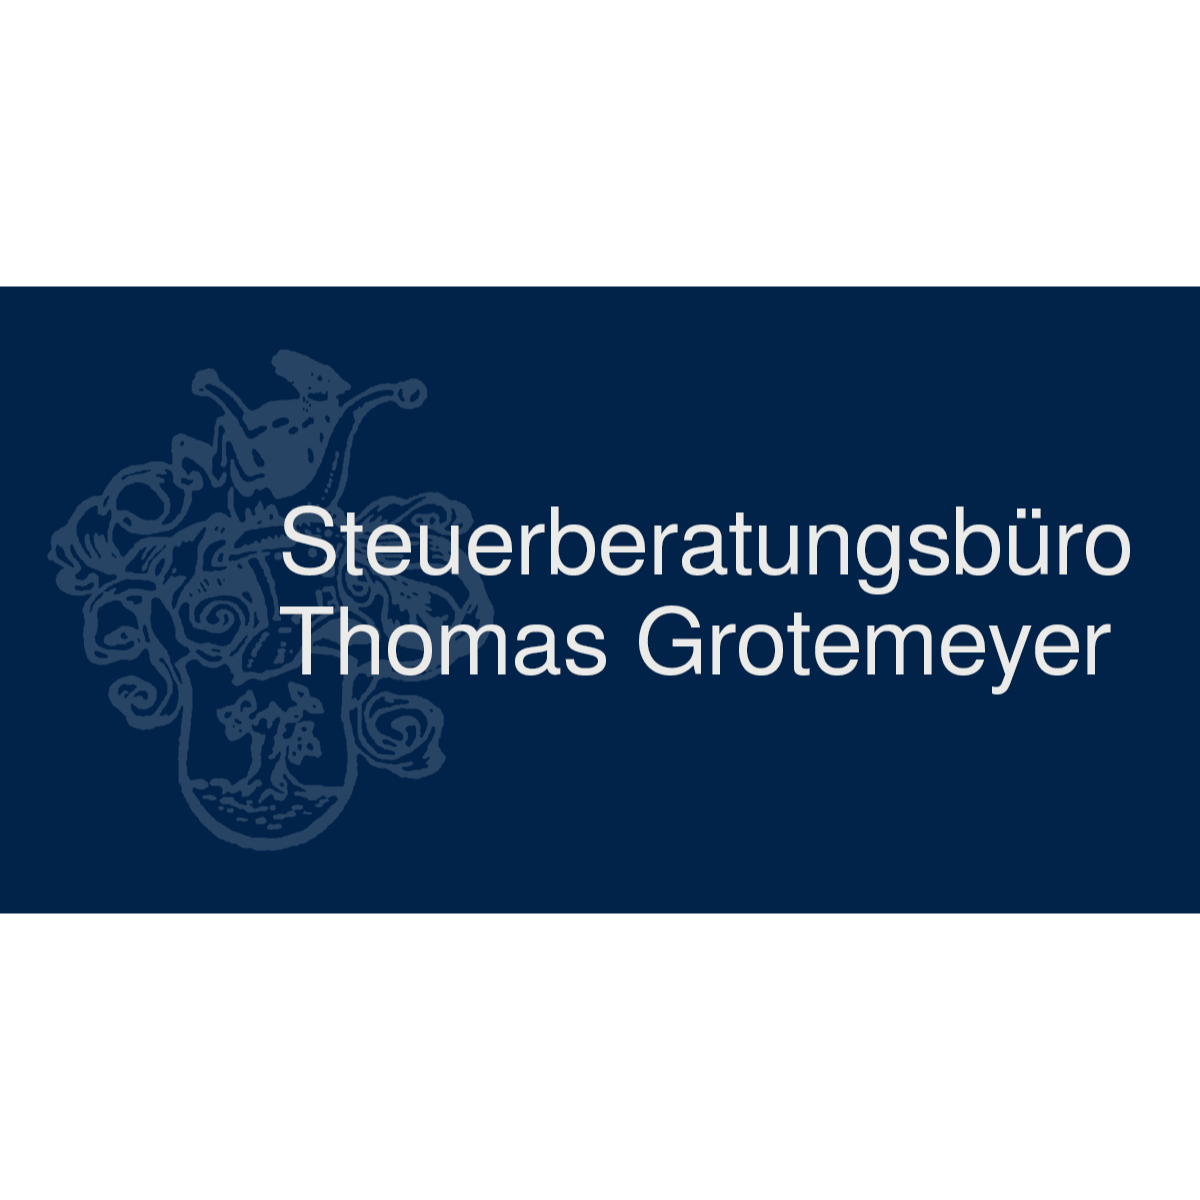 Steuerberatungsbüro Thomas Grotemeyer Logo